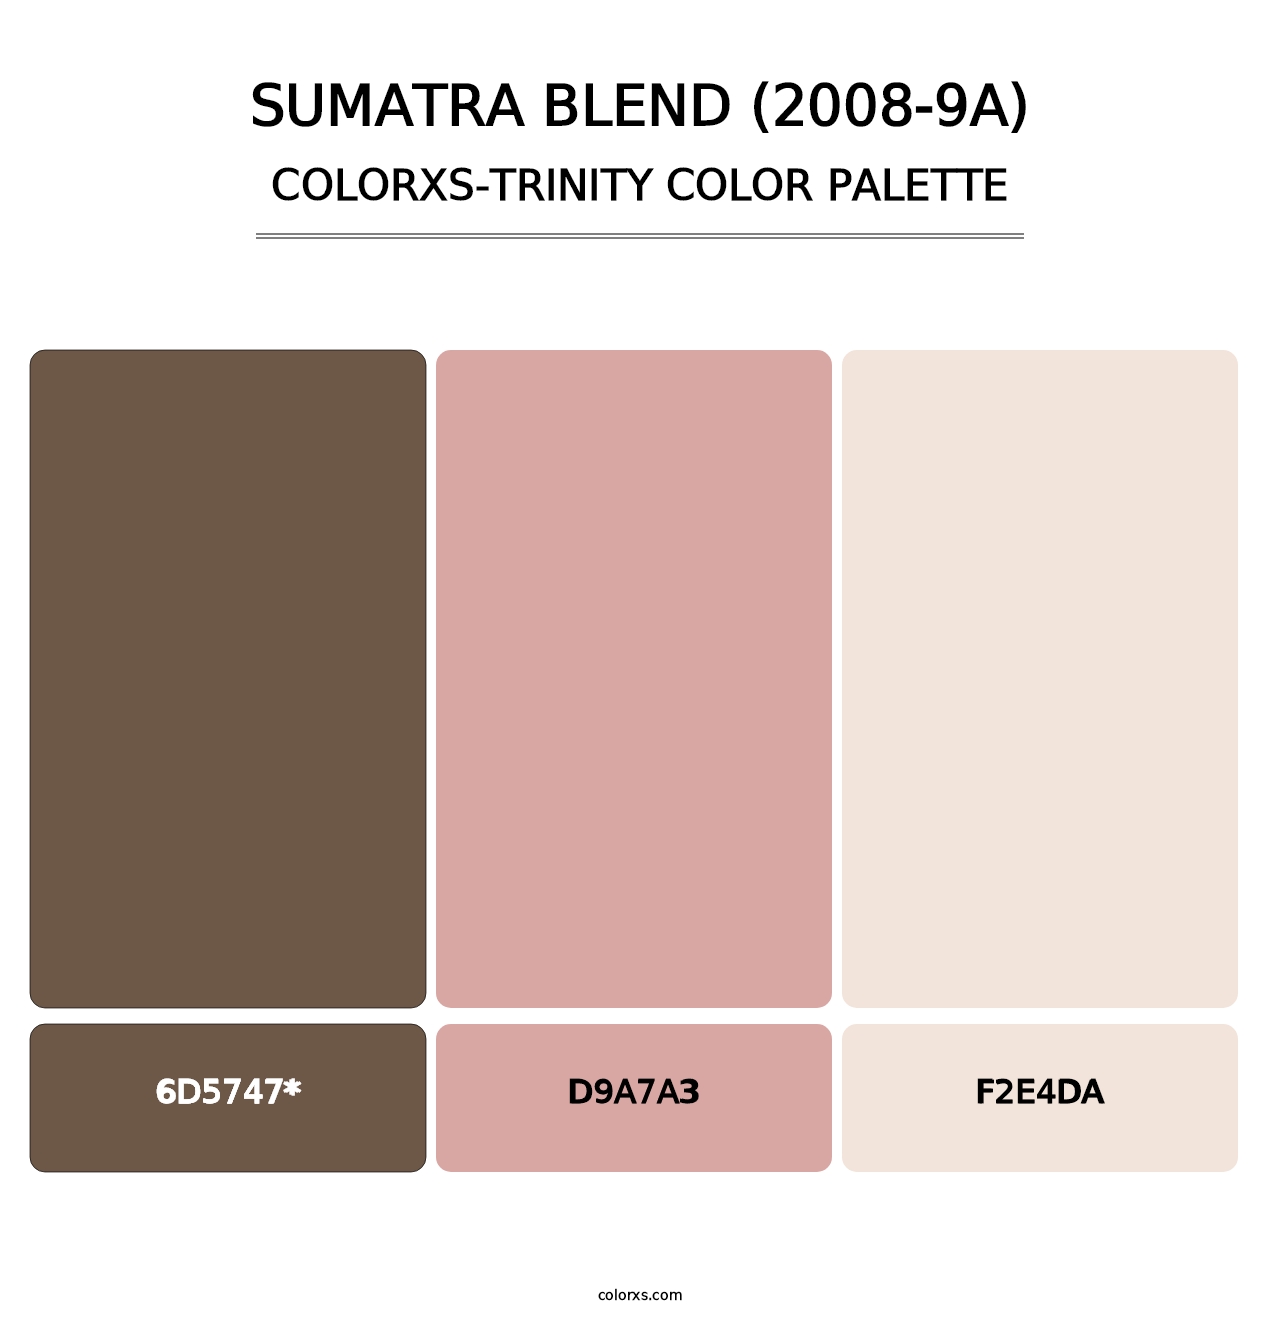 Sumatra Blend (2008-9A) - Colorxs Trinity Palette